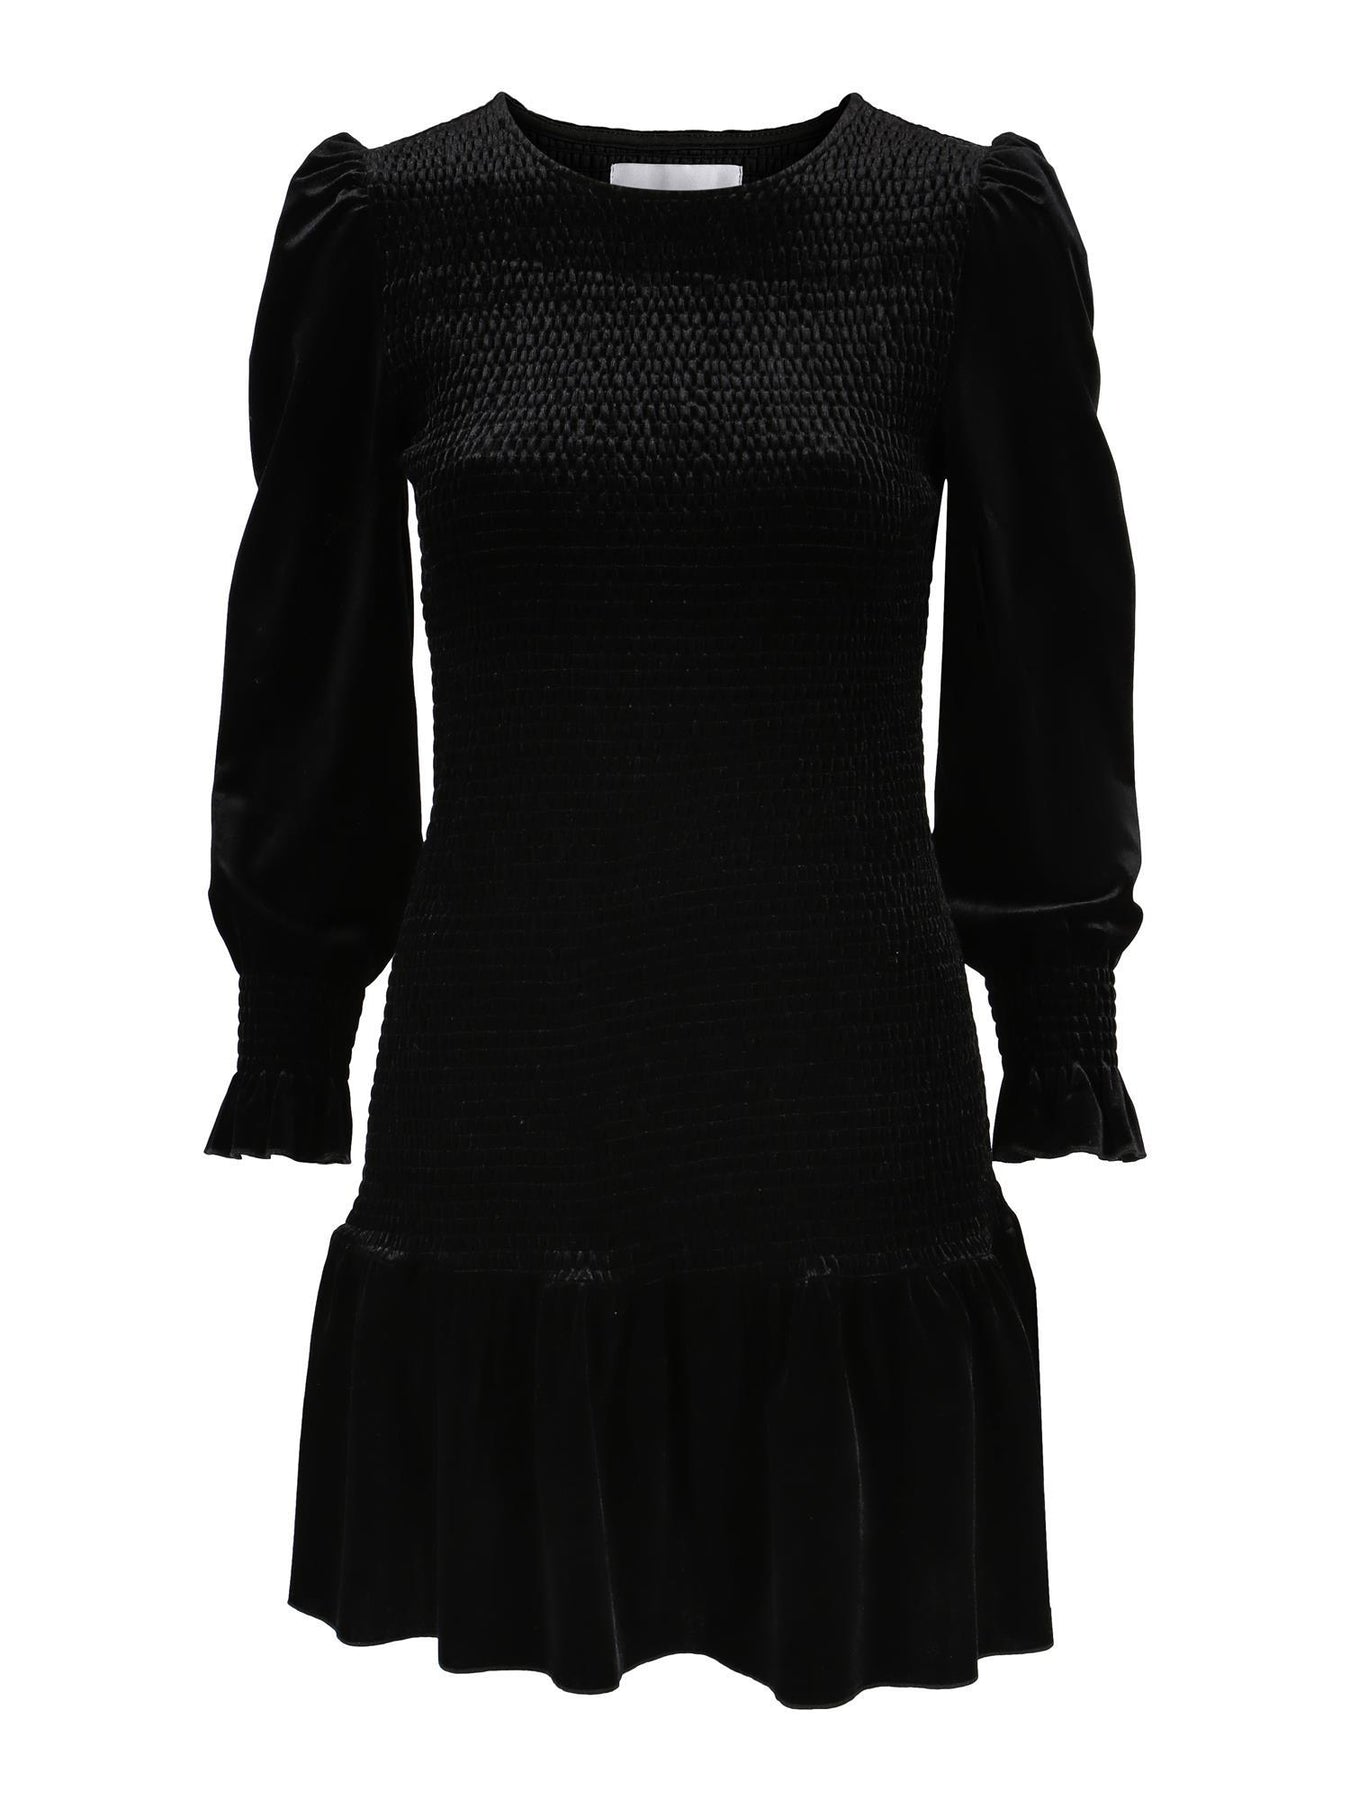 Cecci Velour Dress - Black - Ella & il - Kjoler - VILLOID.no